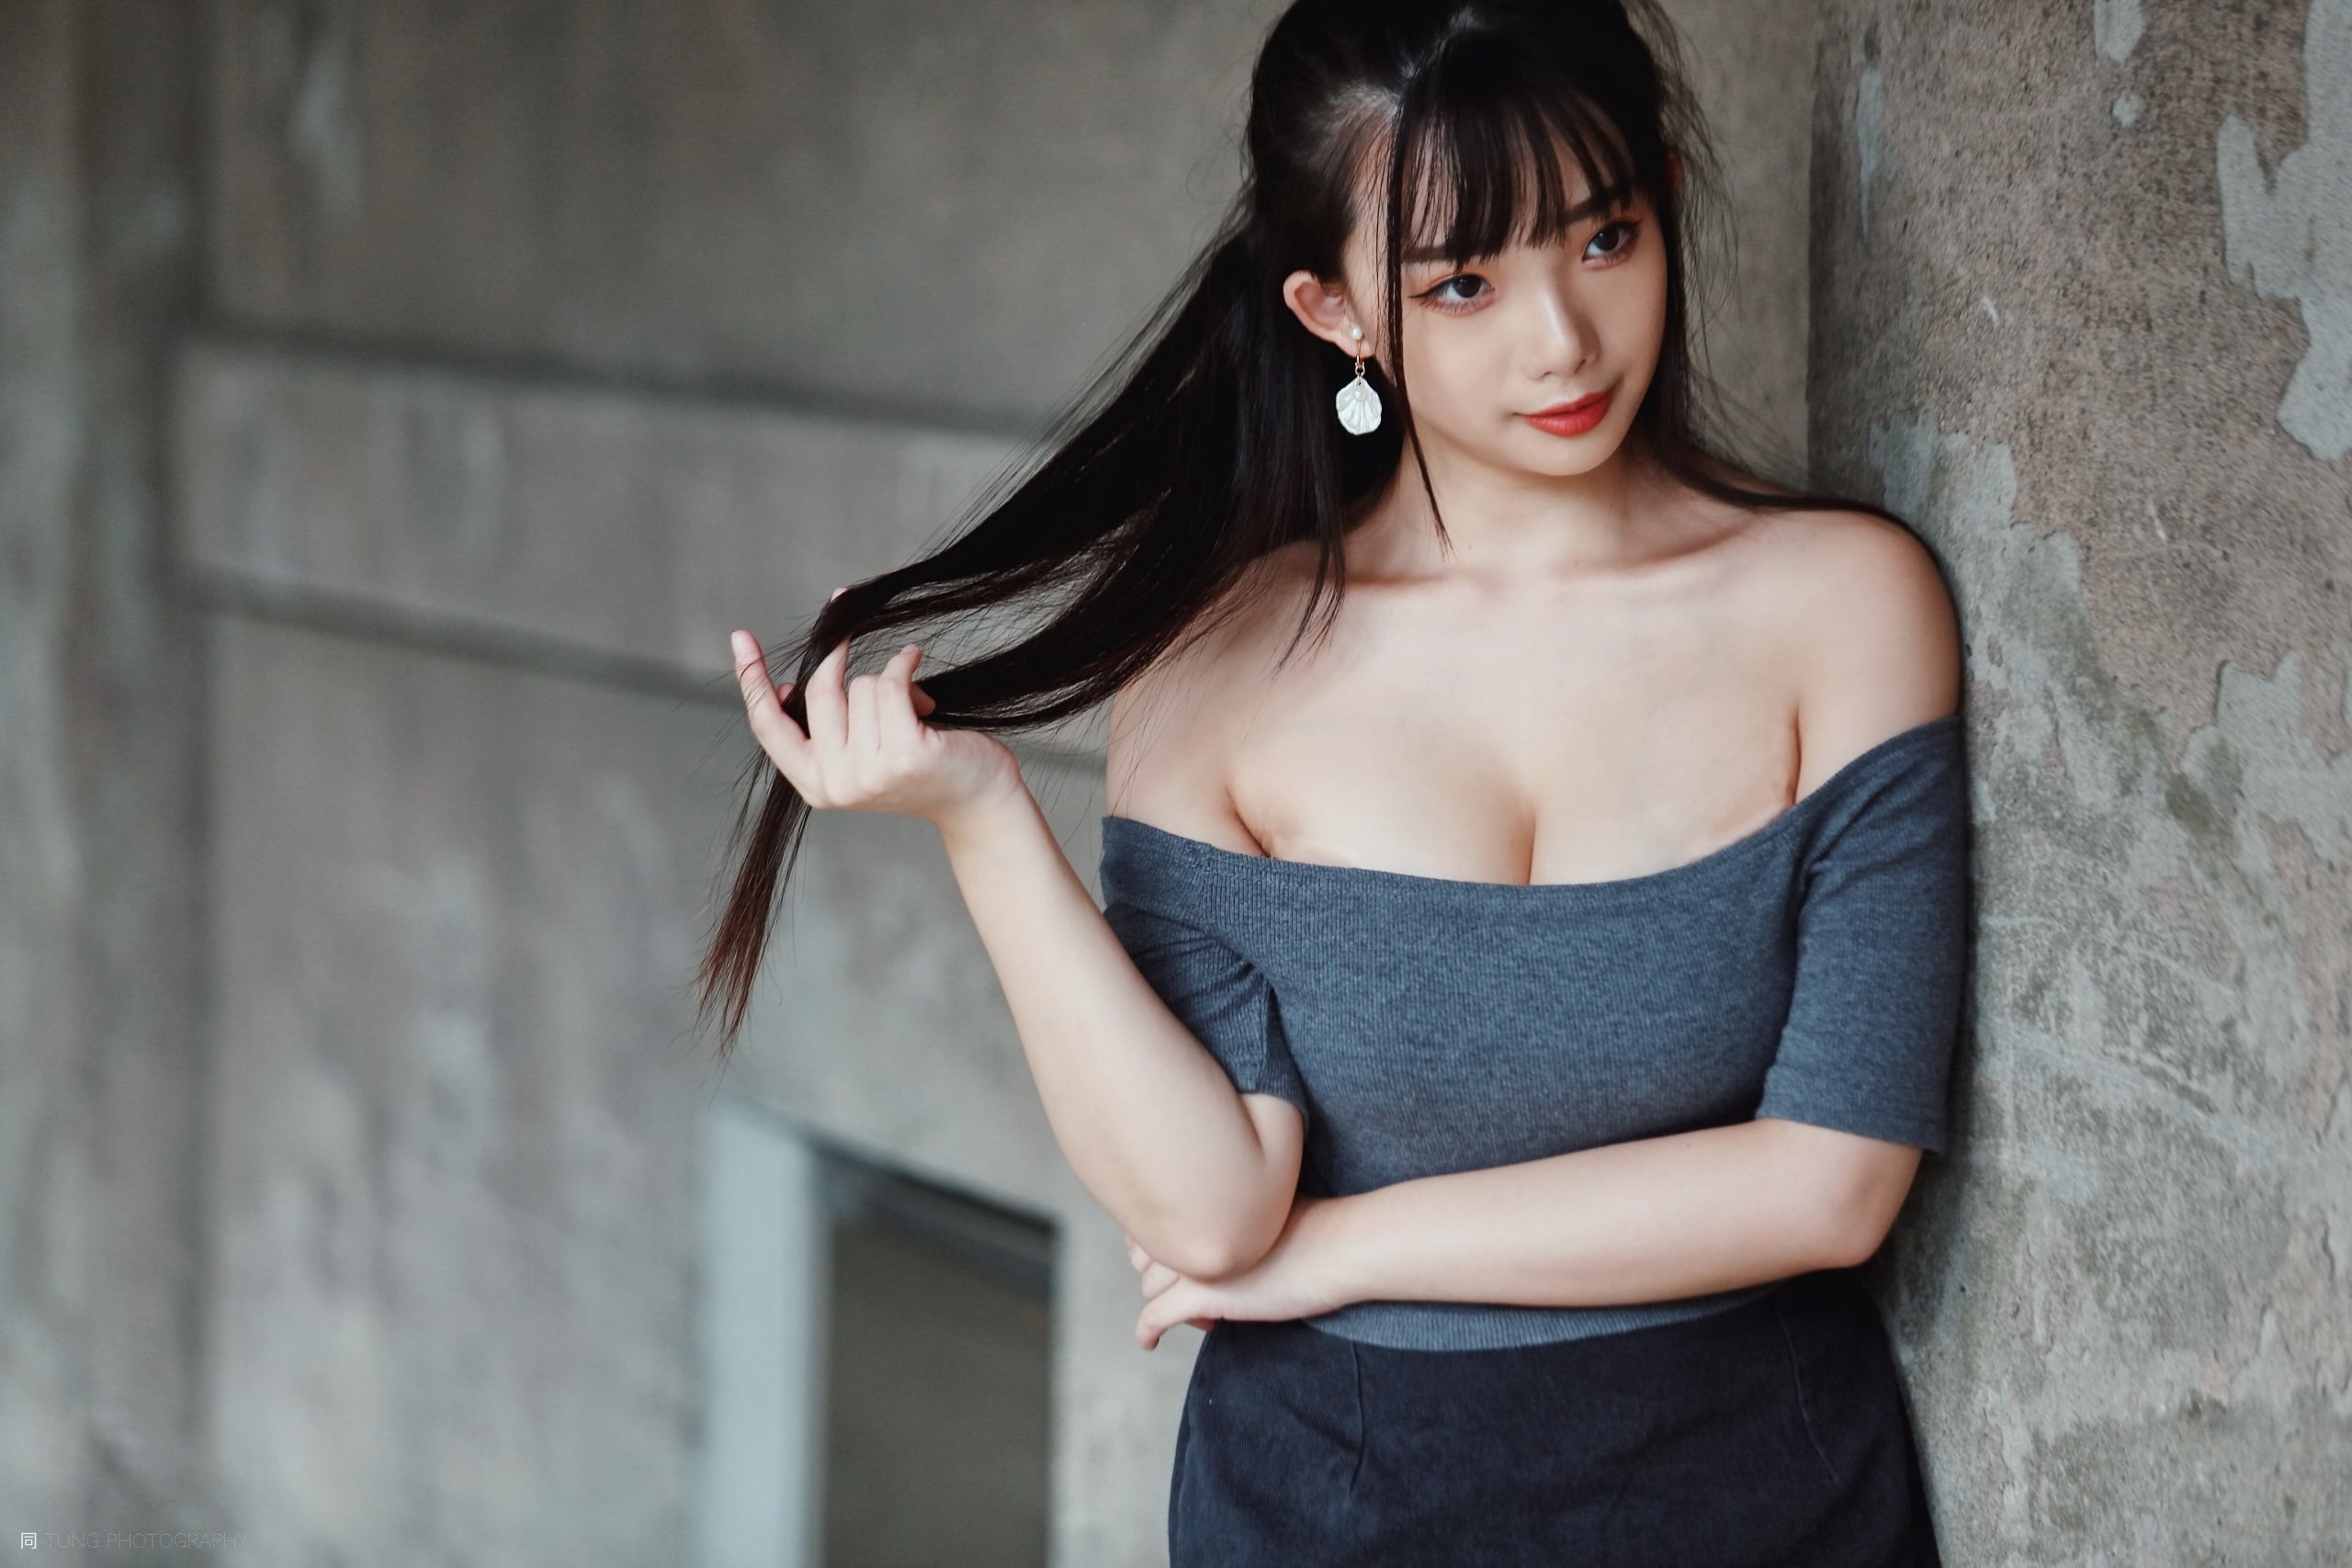 Free Download Hd Wallpaper Ning Shioulin Women Model Asian Brunette Bare Shoulders 